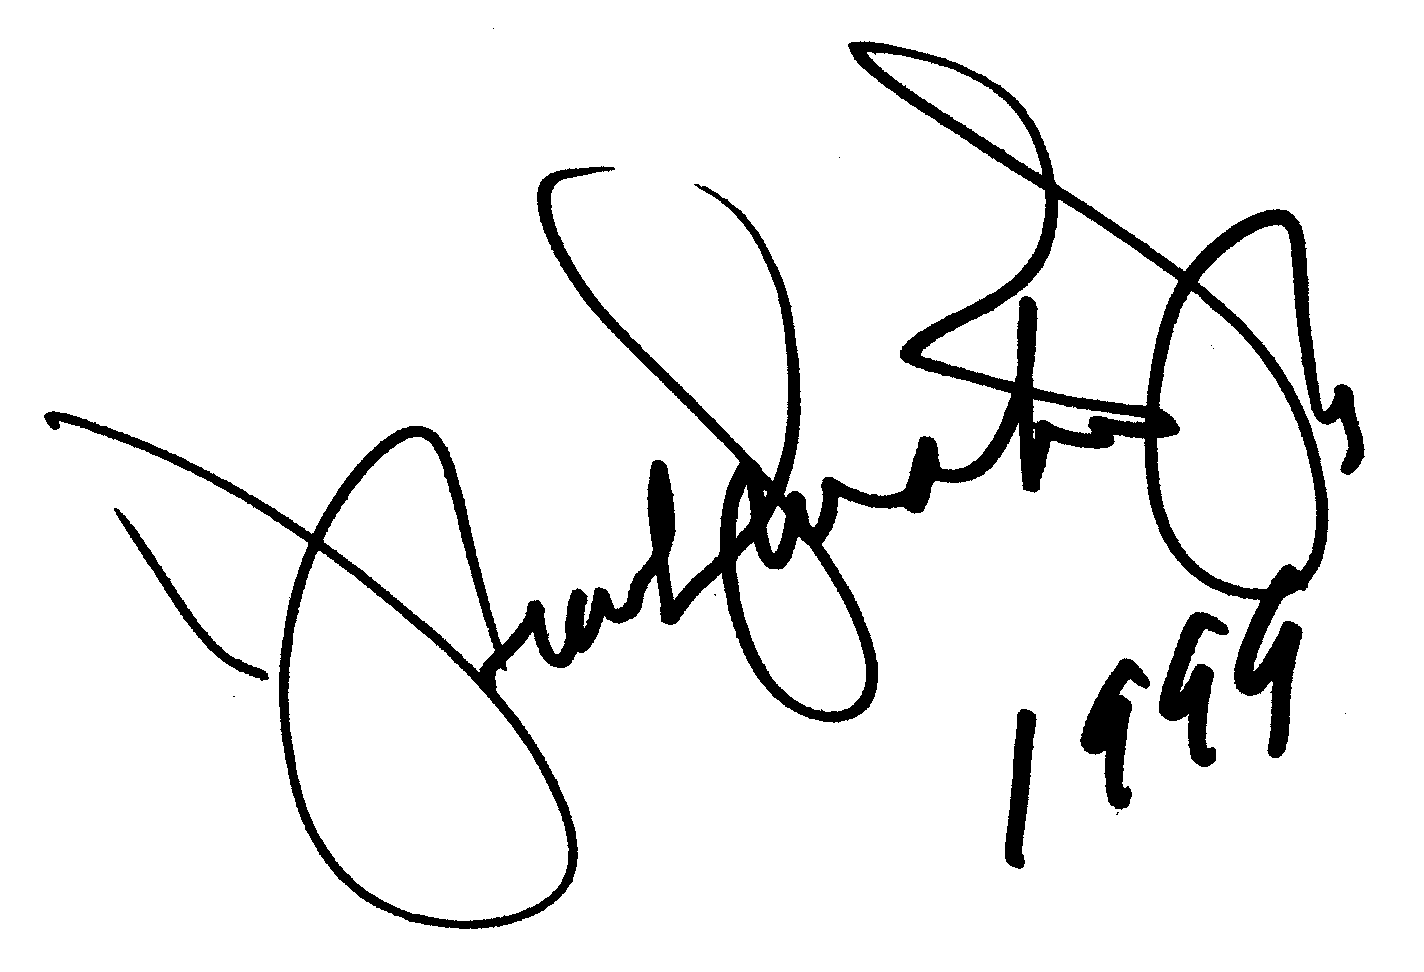 Frank Jr. Sinatra autograph facsimile